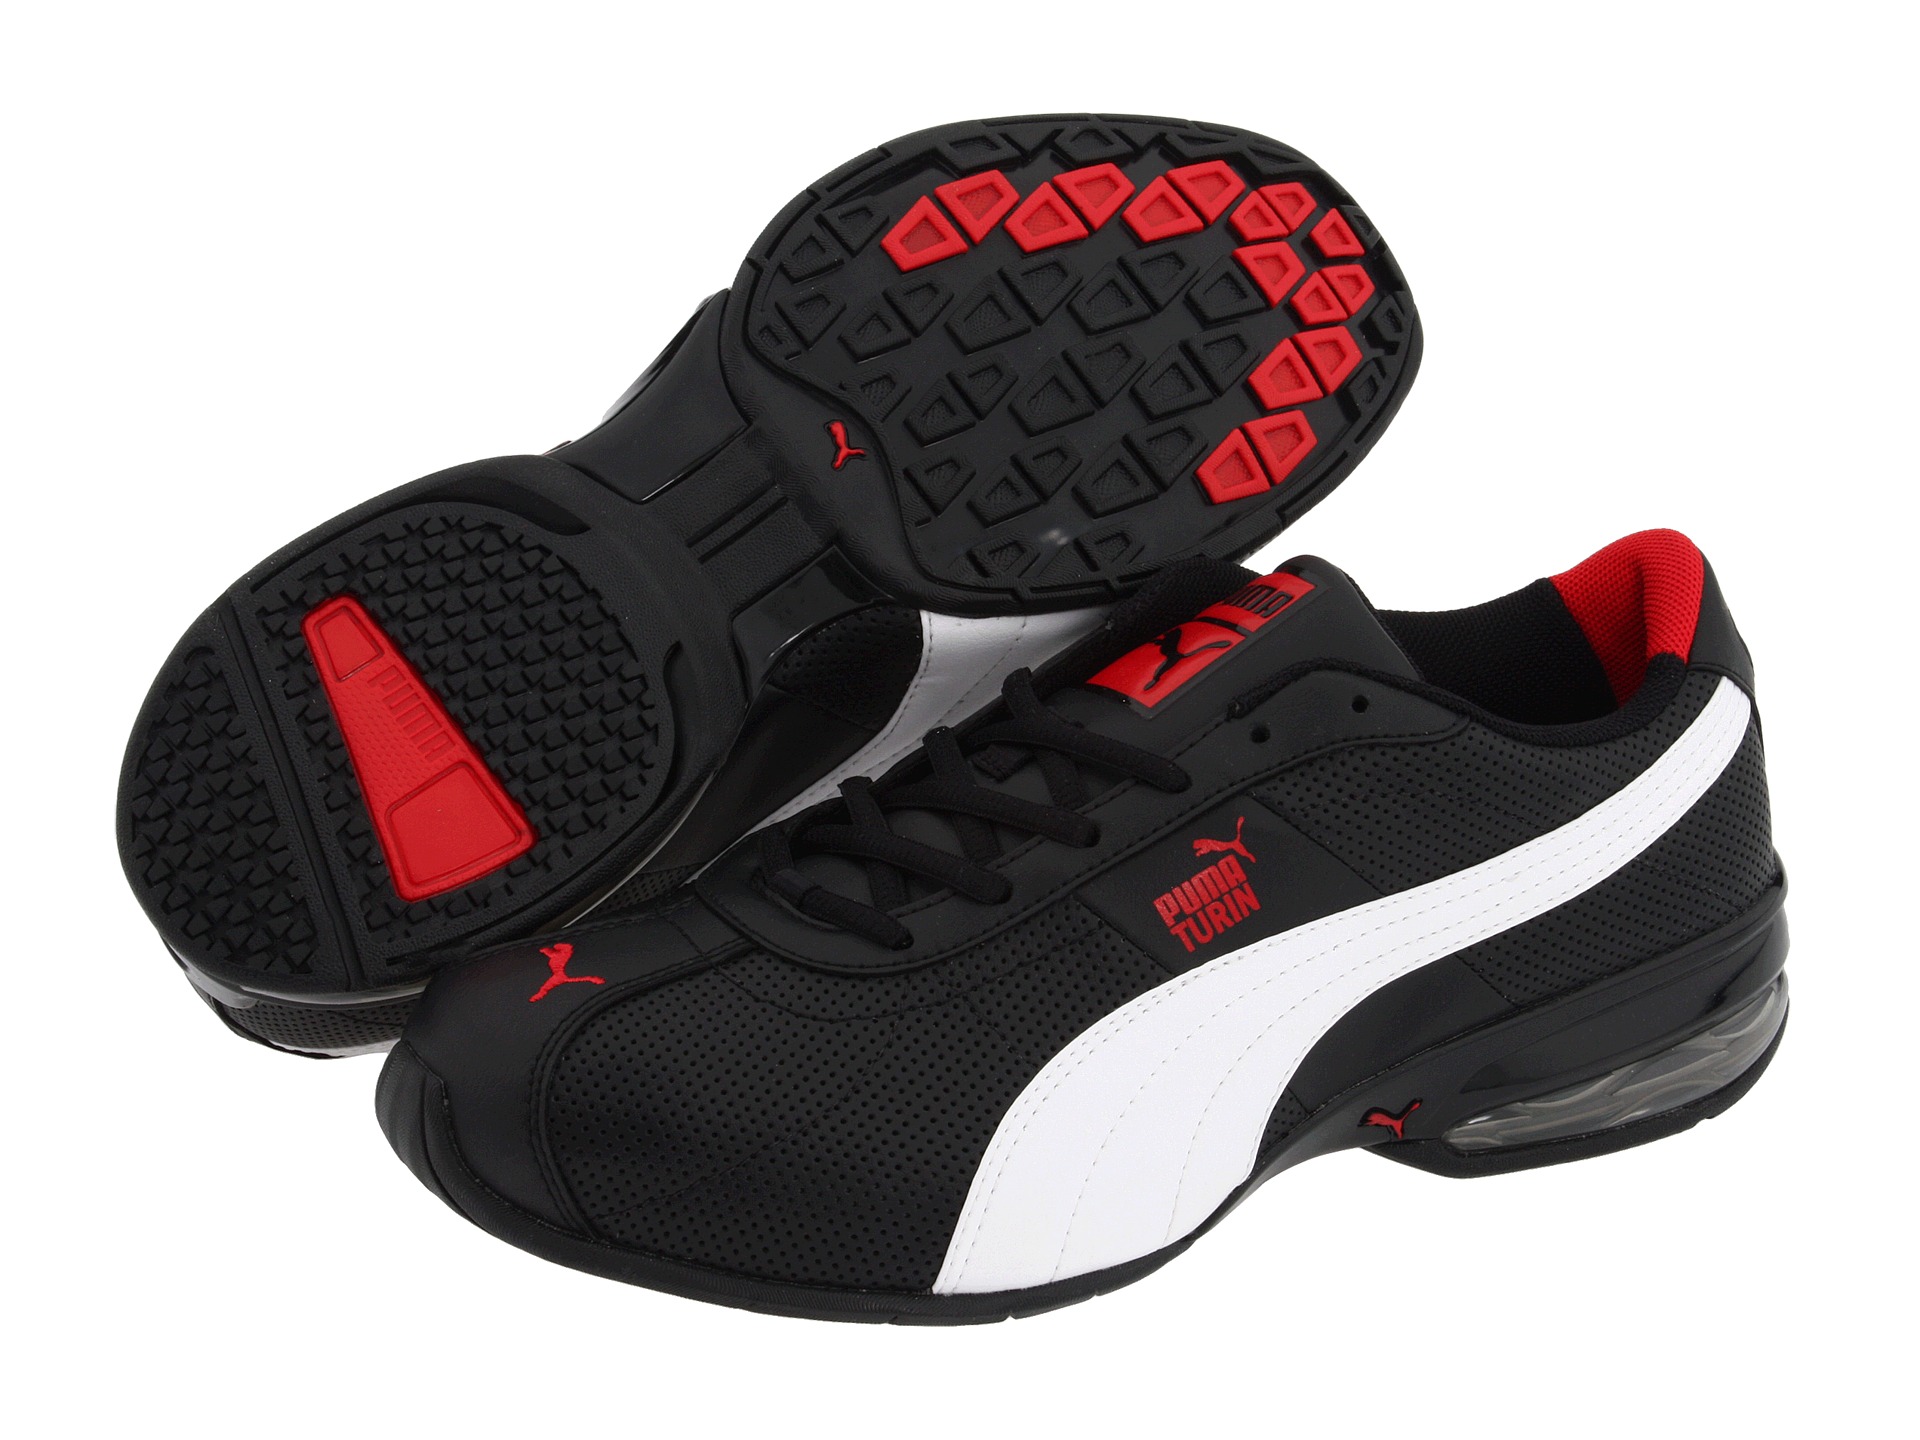 SUPER SALE! PUMA Cell Turin Perf Athletic & Crossfit Shoes US 11 Med NIB